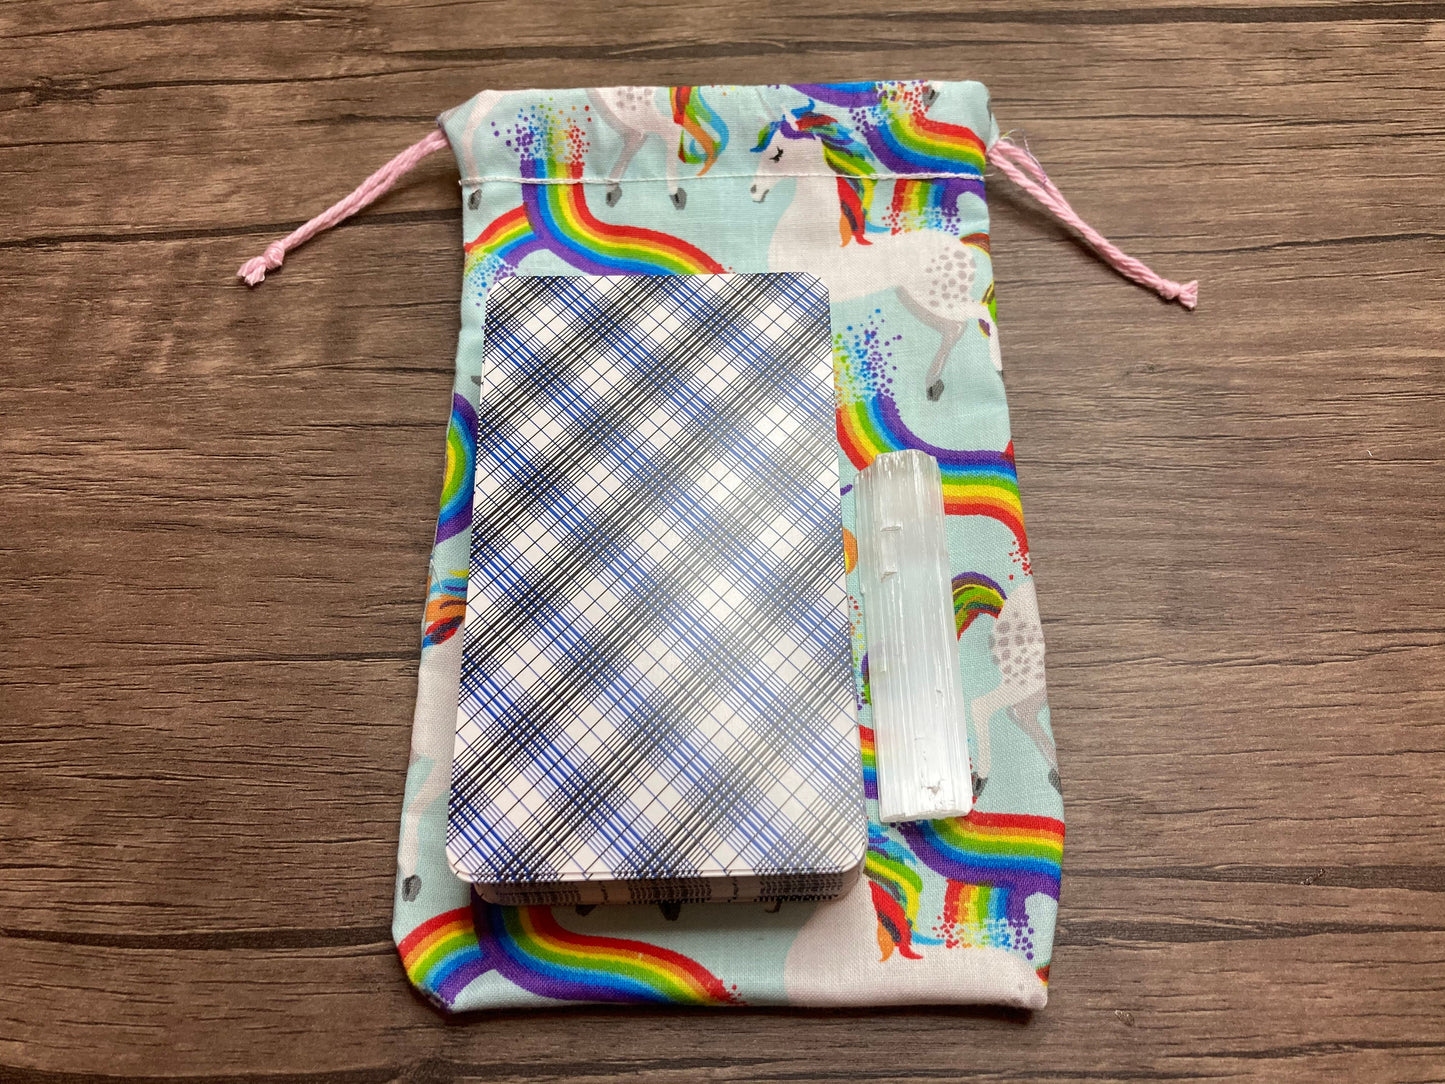 Handmade Cotton Tarot Bag (For Charity #2 Unicorns)